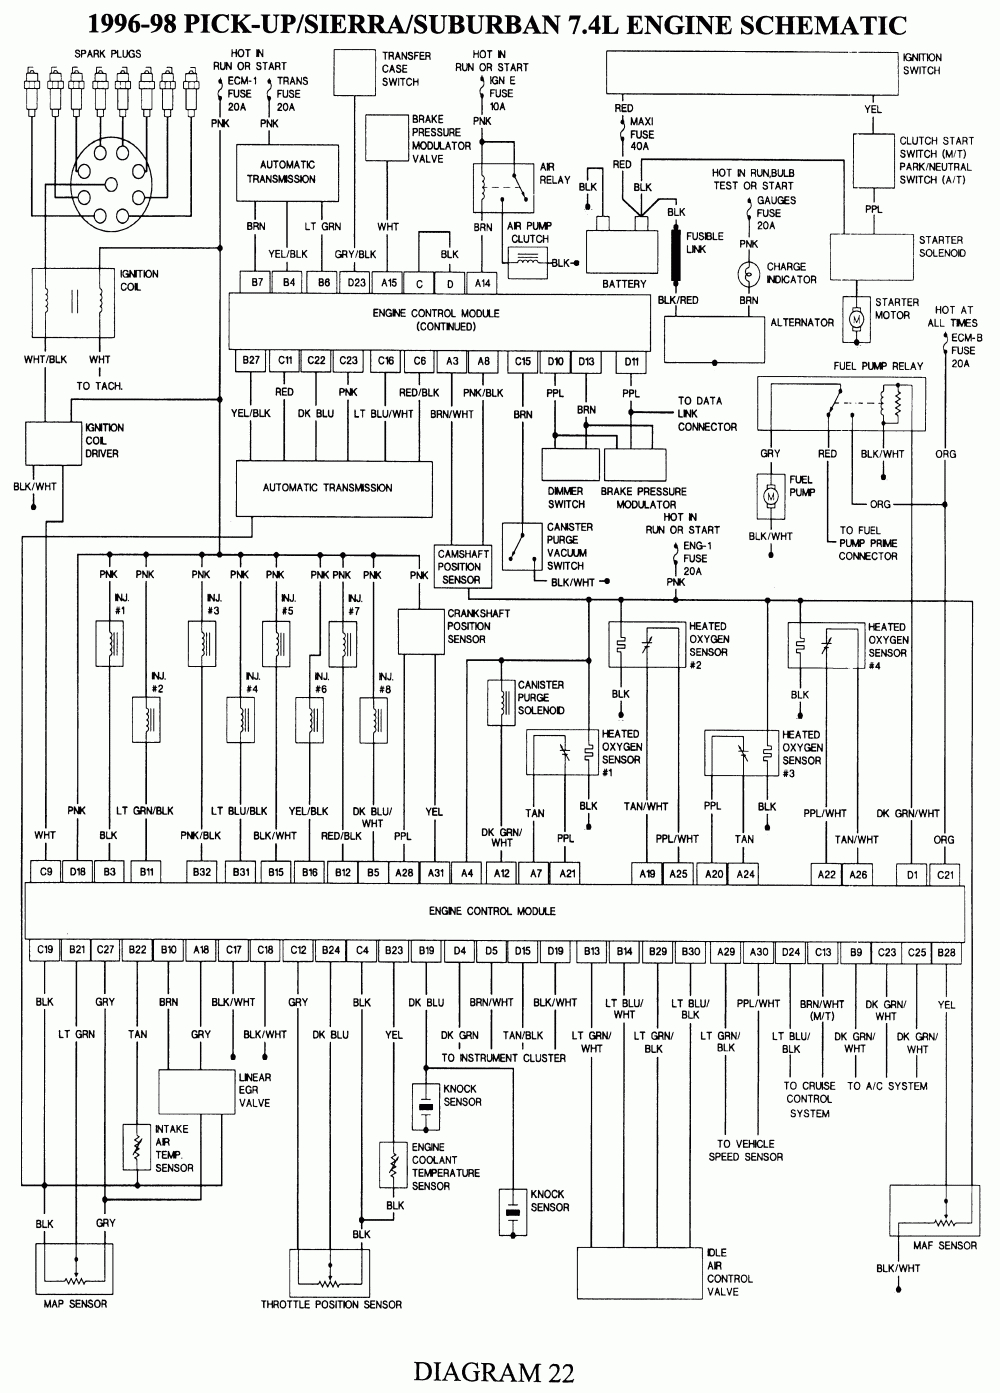 1989 Chevy 1500 Engine Diagram - Wiring Diagrams Hubs - Wiring Diagram For 1997 Chevy Silverado